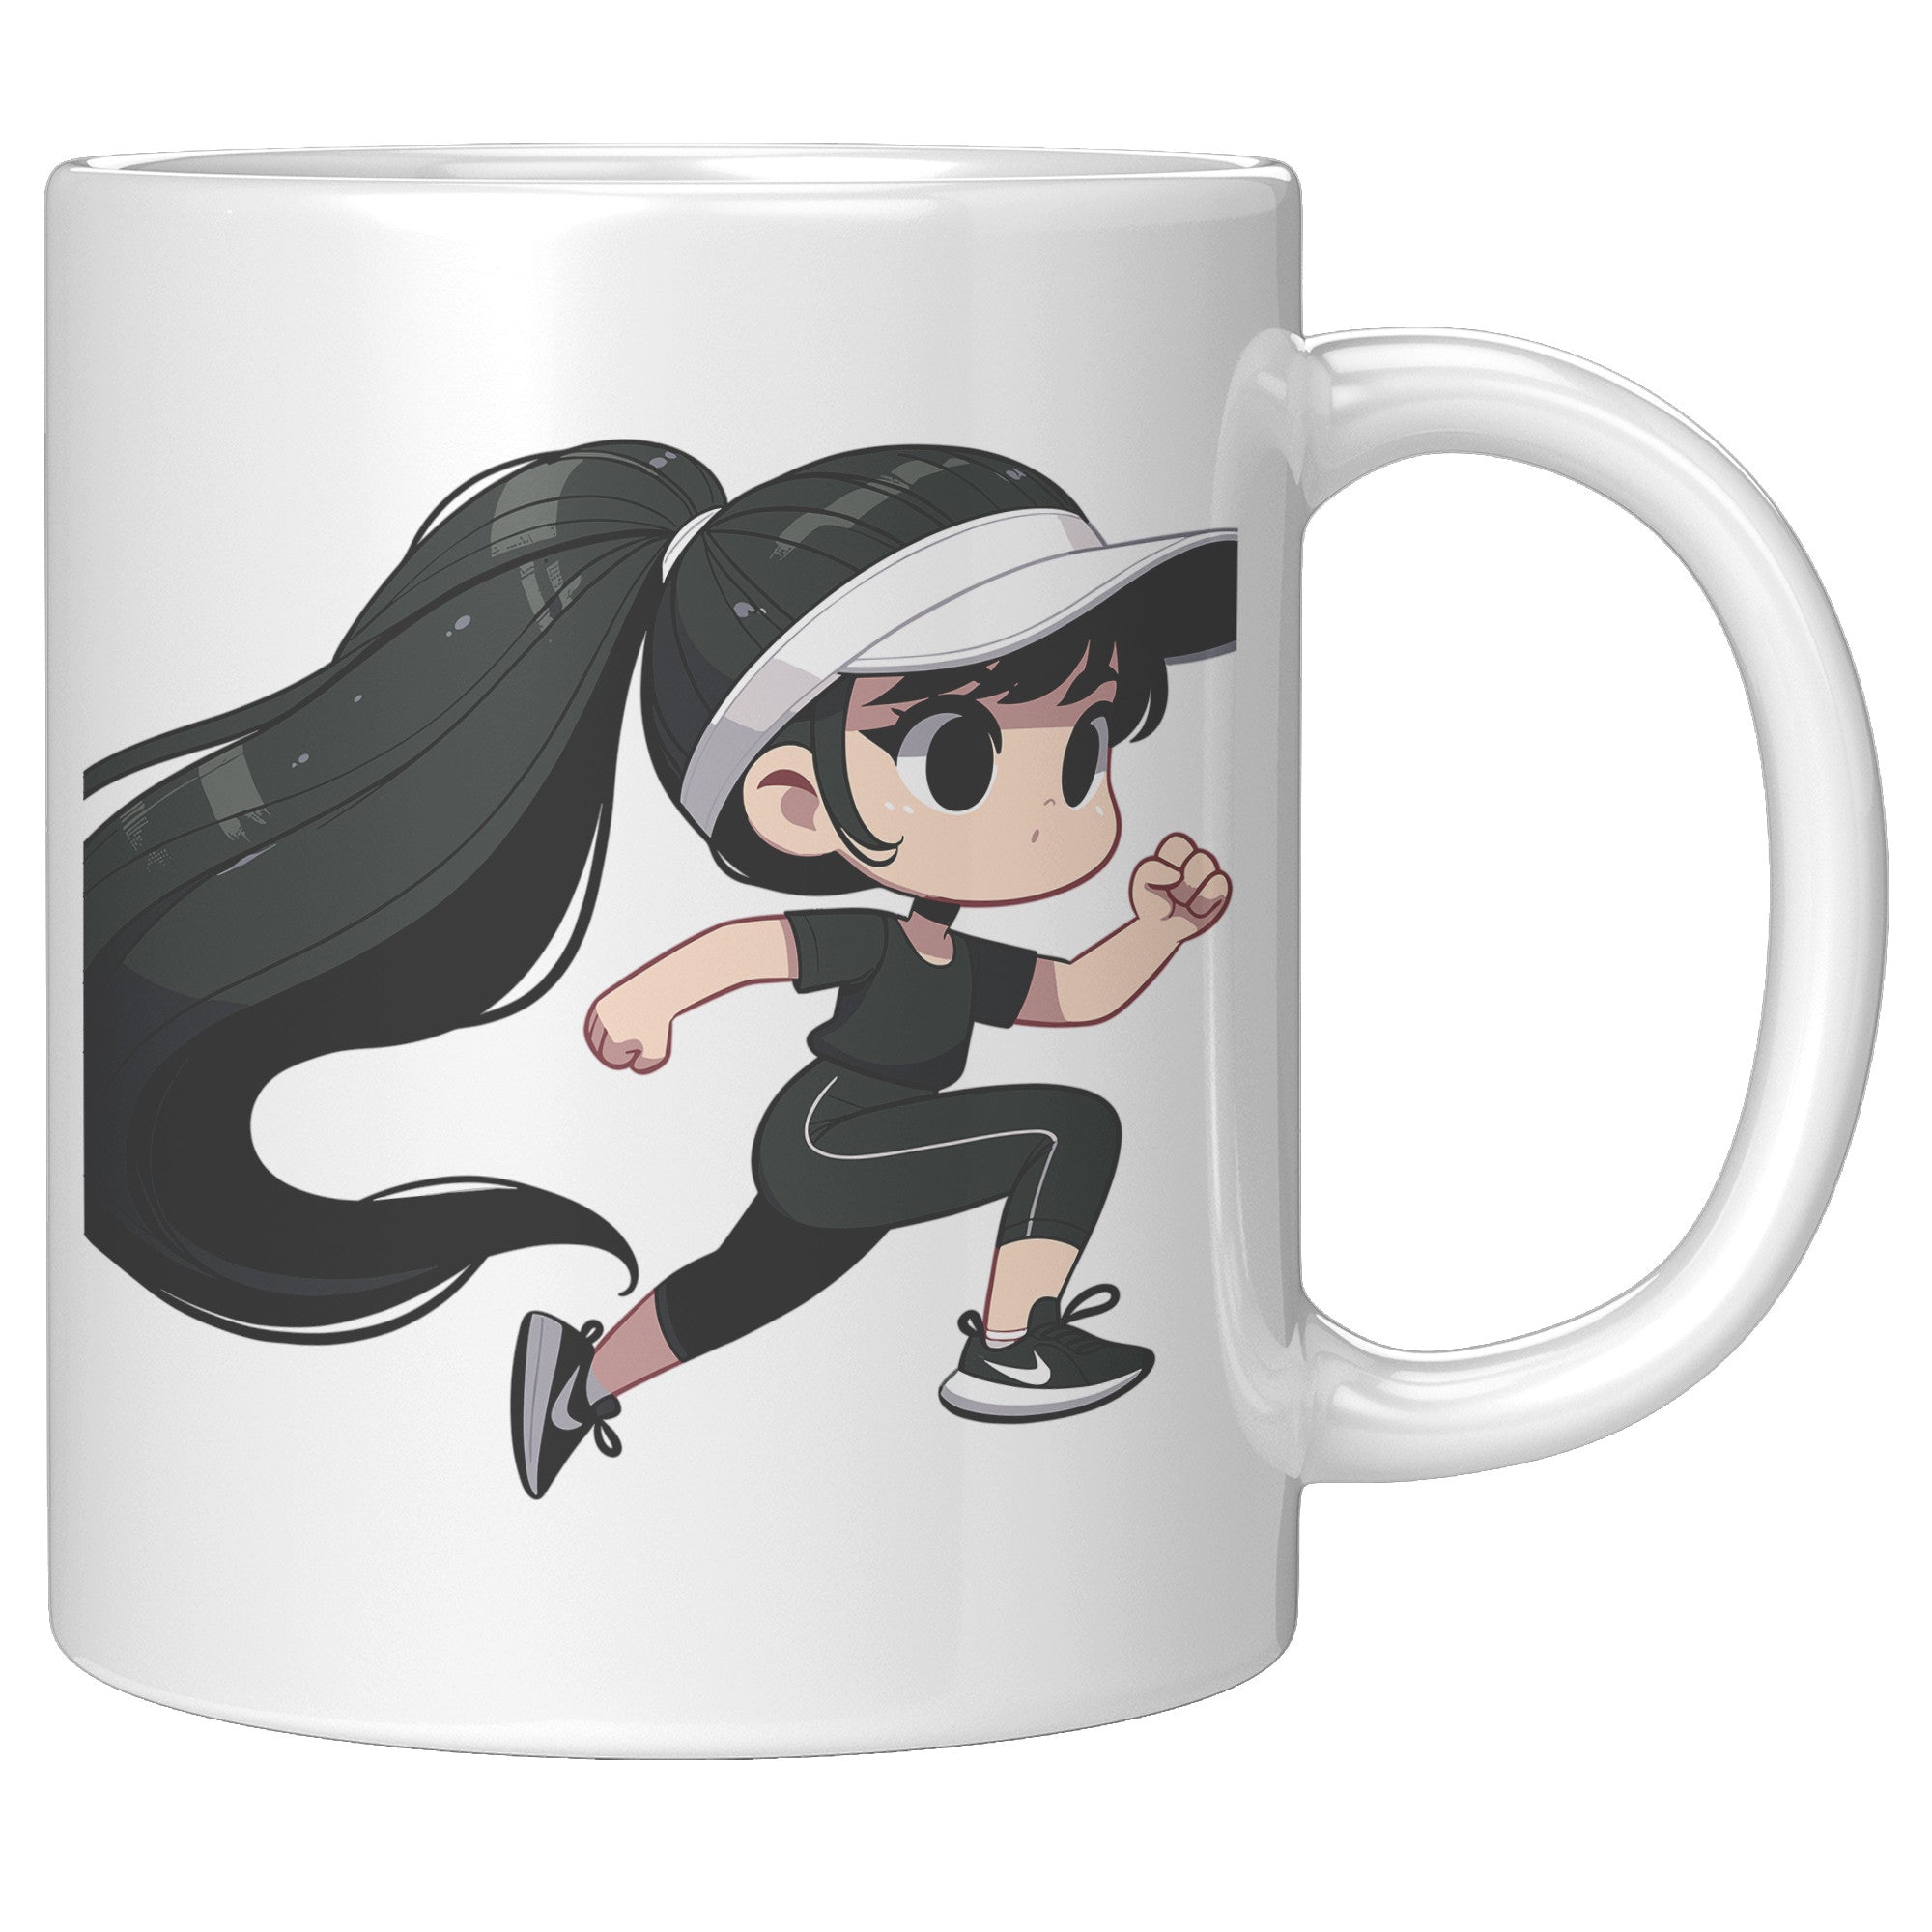 "Female Runner Coffee Mug - Inspirational Running Quotes Cup - Perfect Gift for Women Runners - Motivational Marathoner's Morning Brew" - E